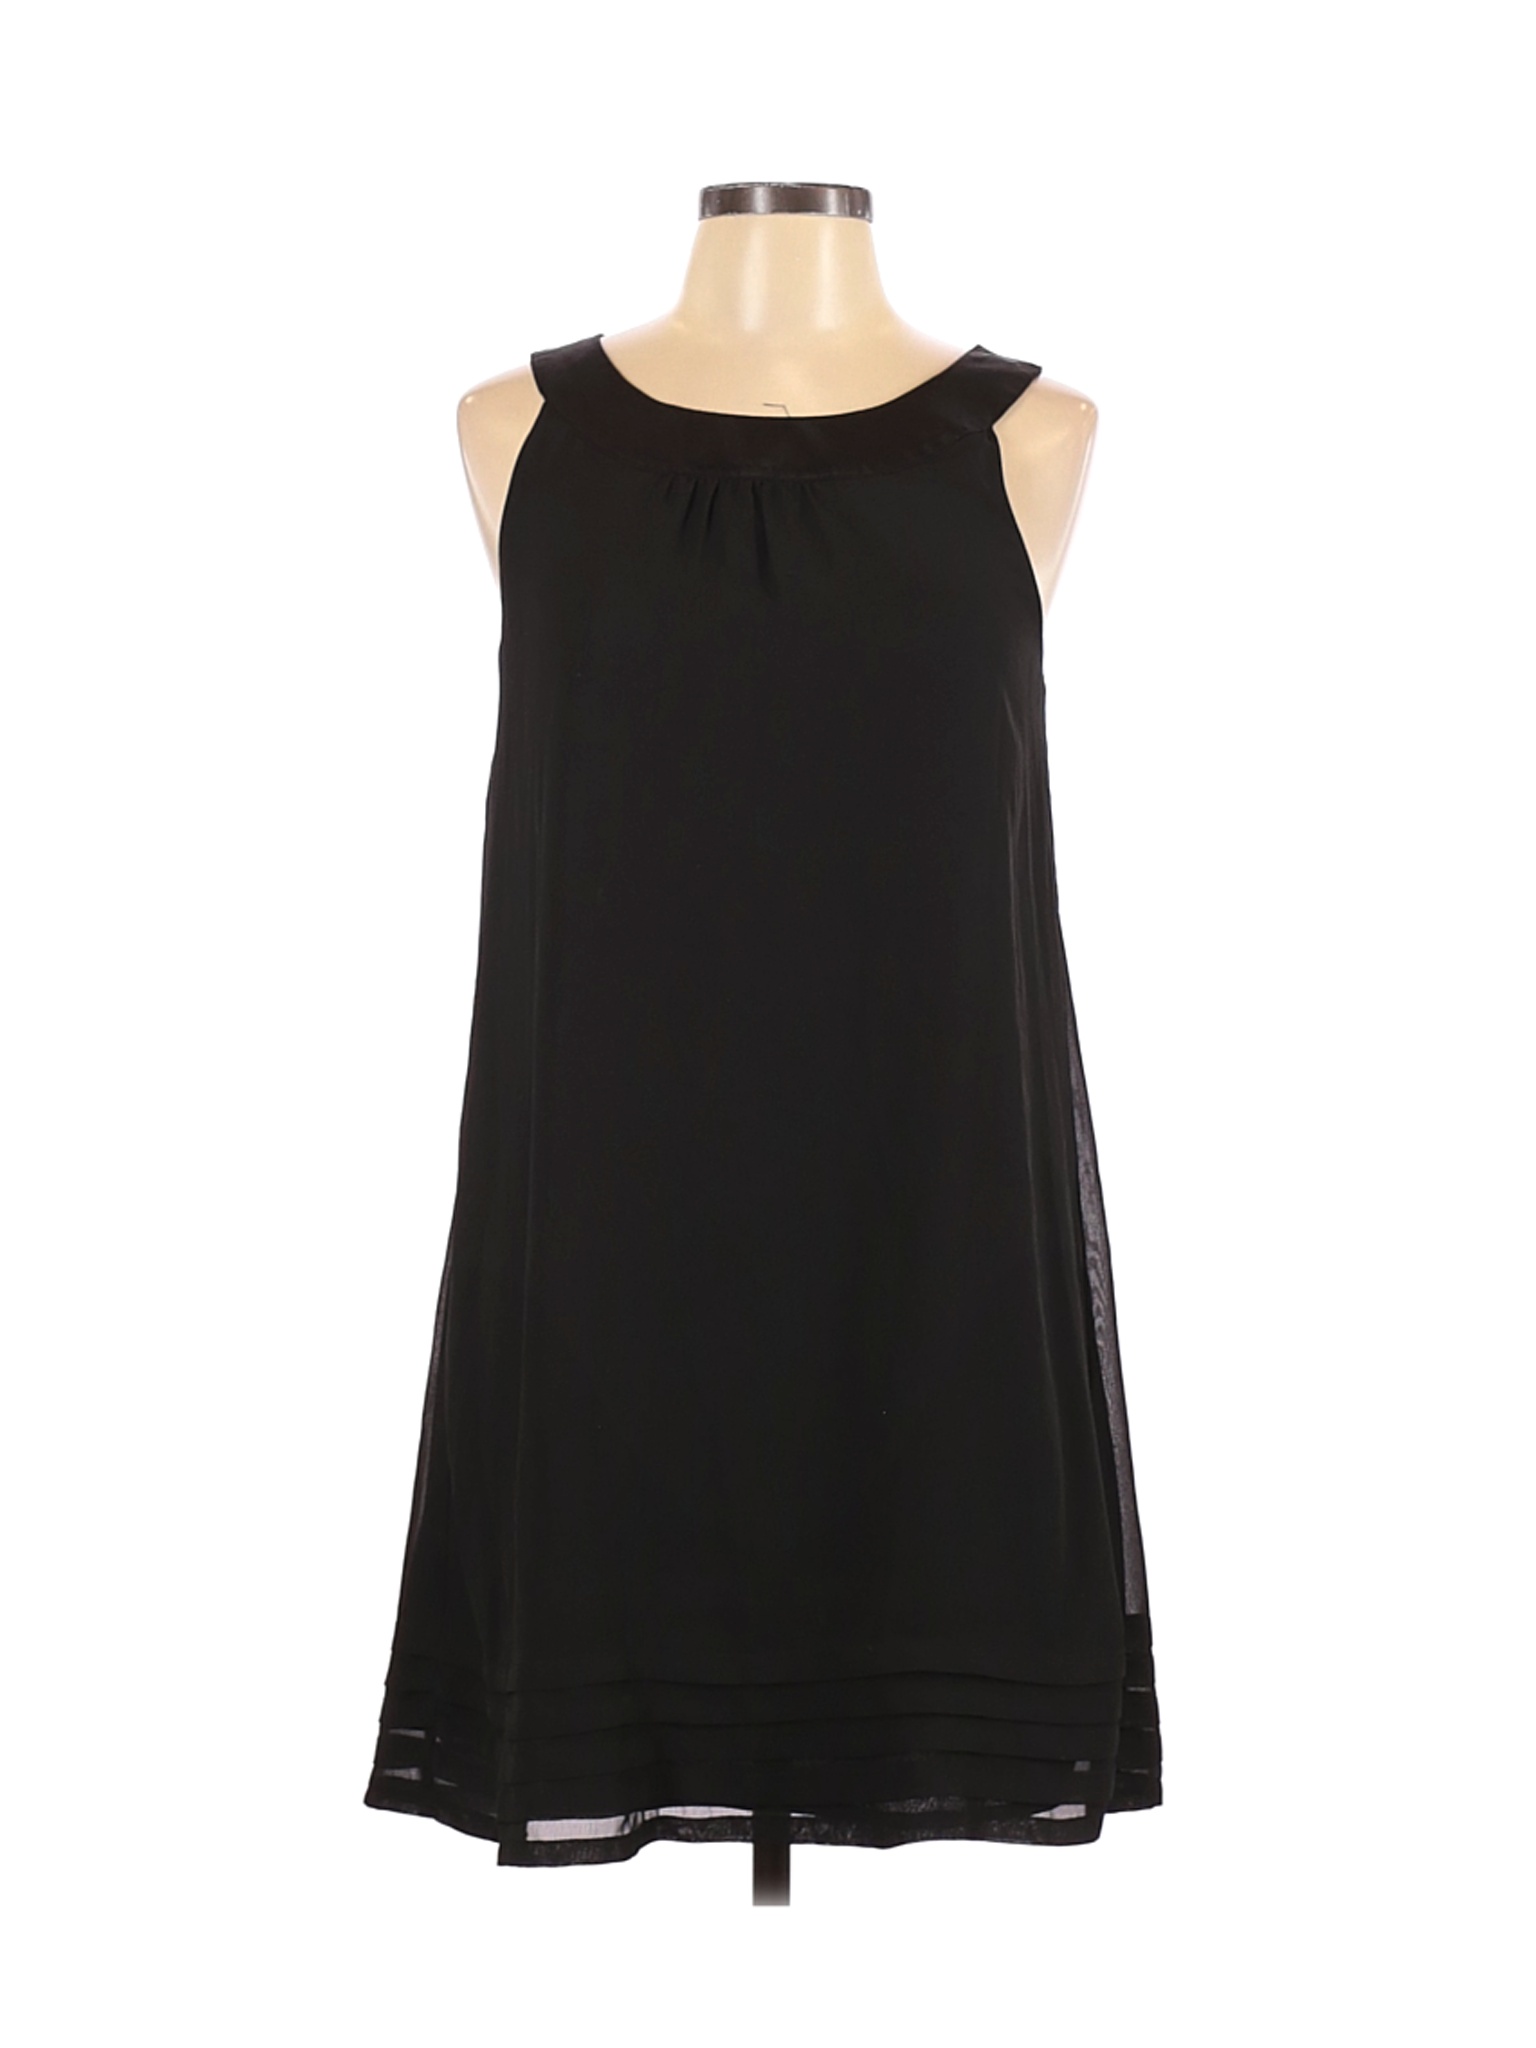 H&M Women Black Casual Dress 6 | eBay